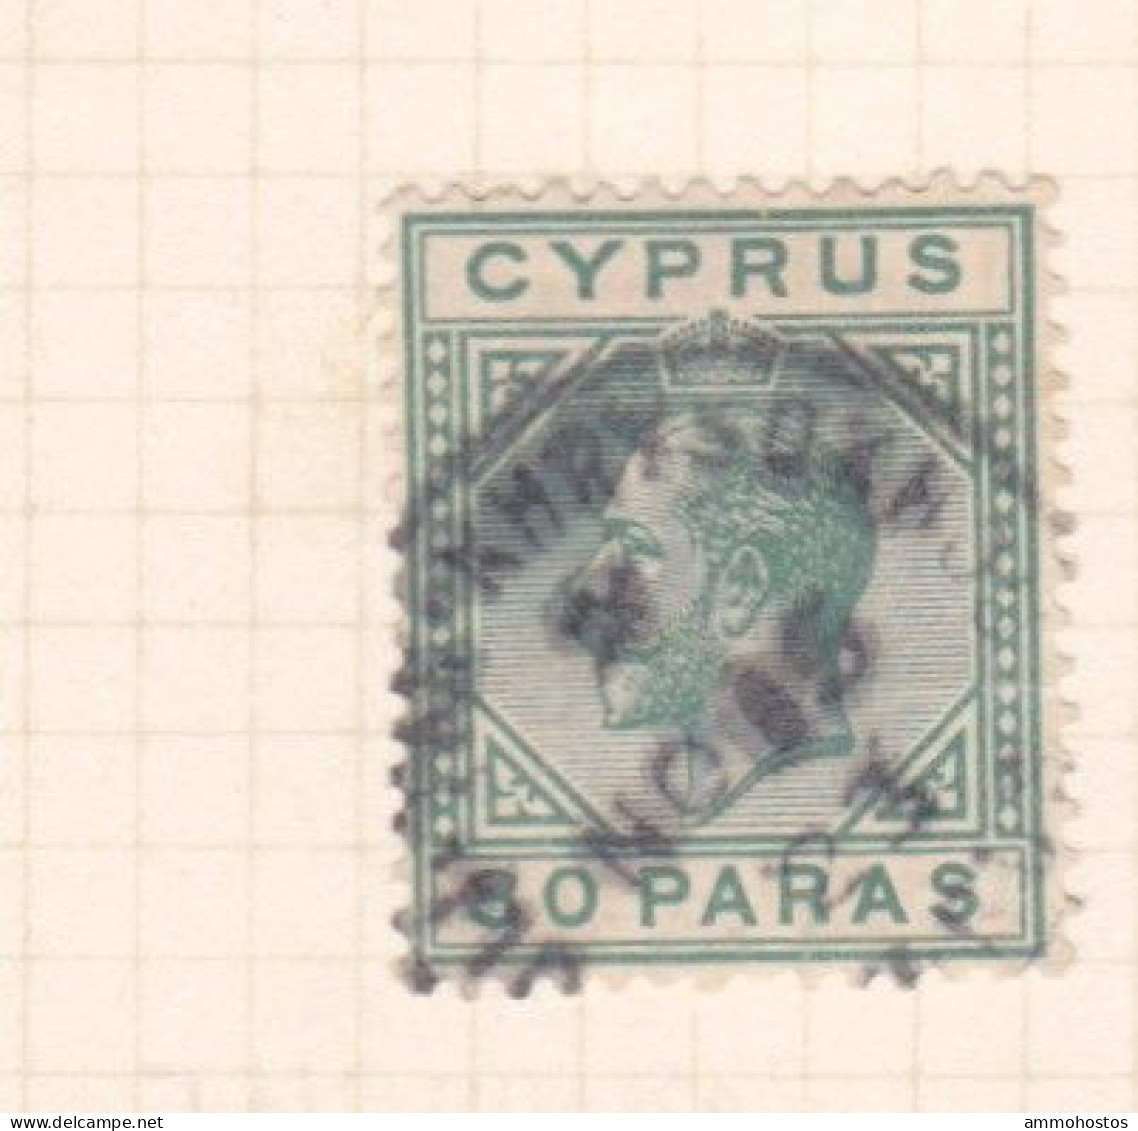 CYPRUS KGV POLIS TIS KHRYSOKHOUS SINGLE CIRCLE RURAL POSTMARK - Chipre (...-1960)